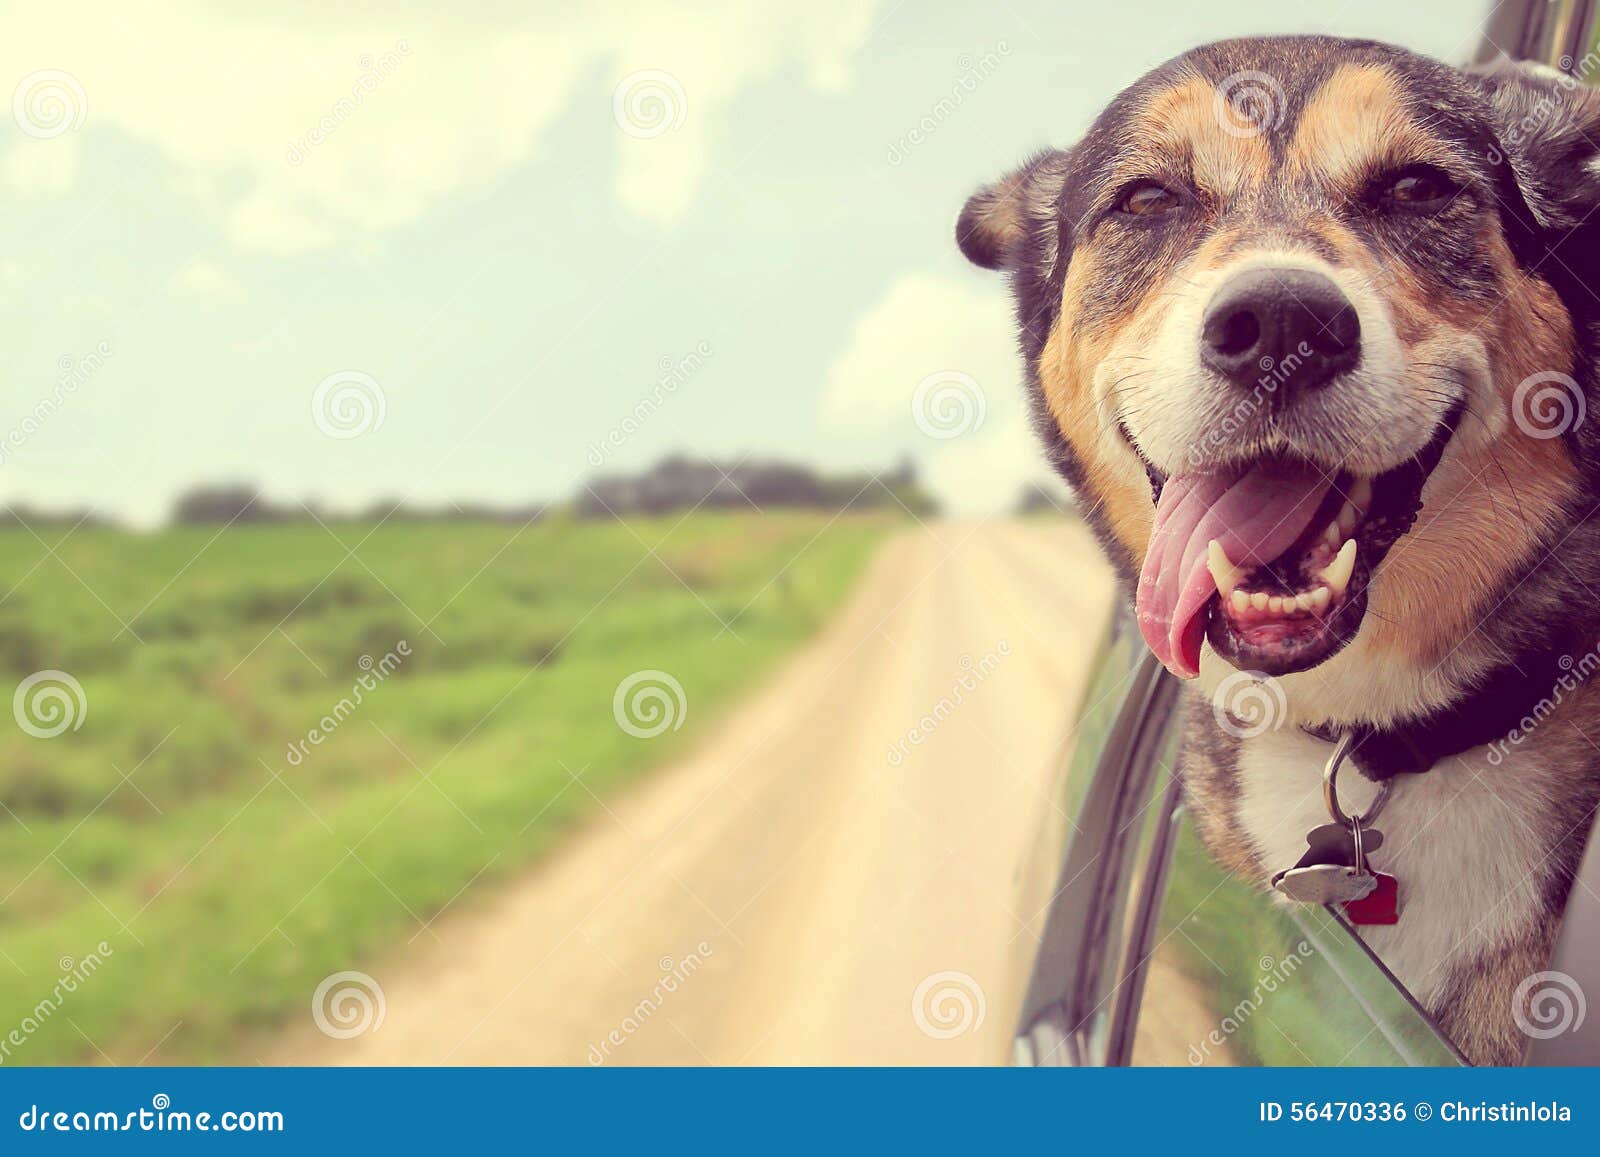 happy dog sticking head out car window